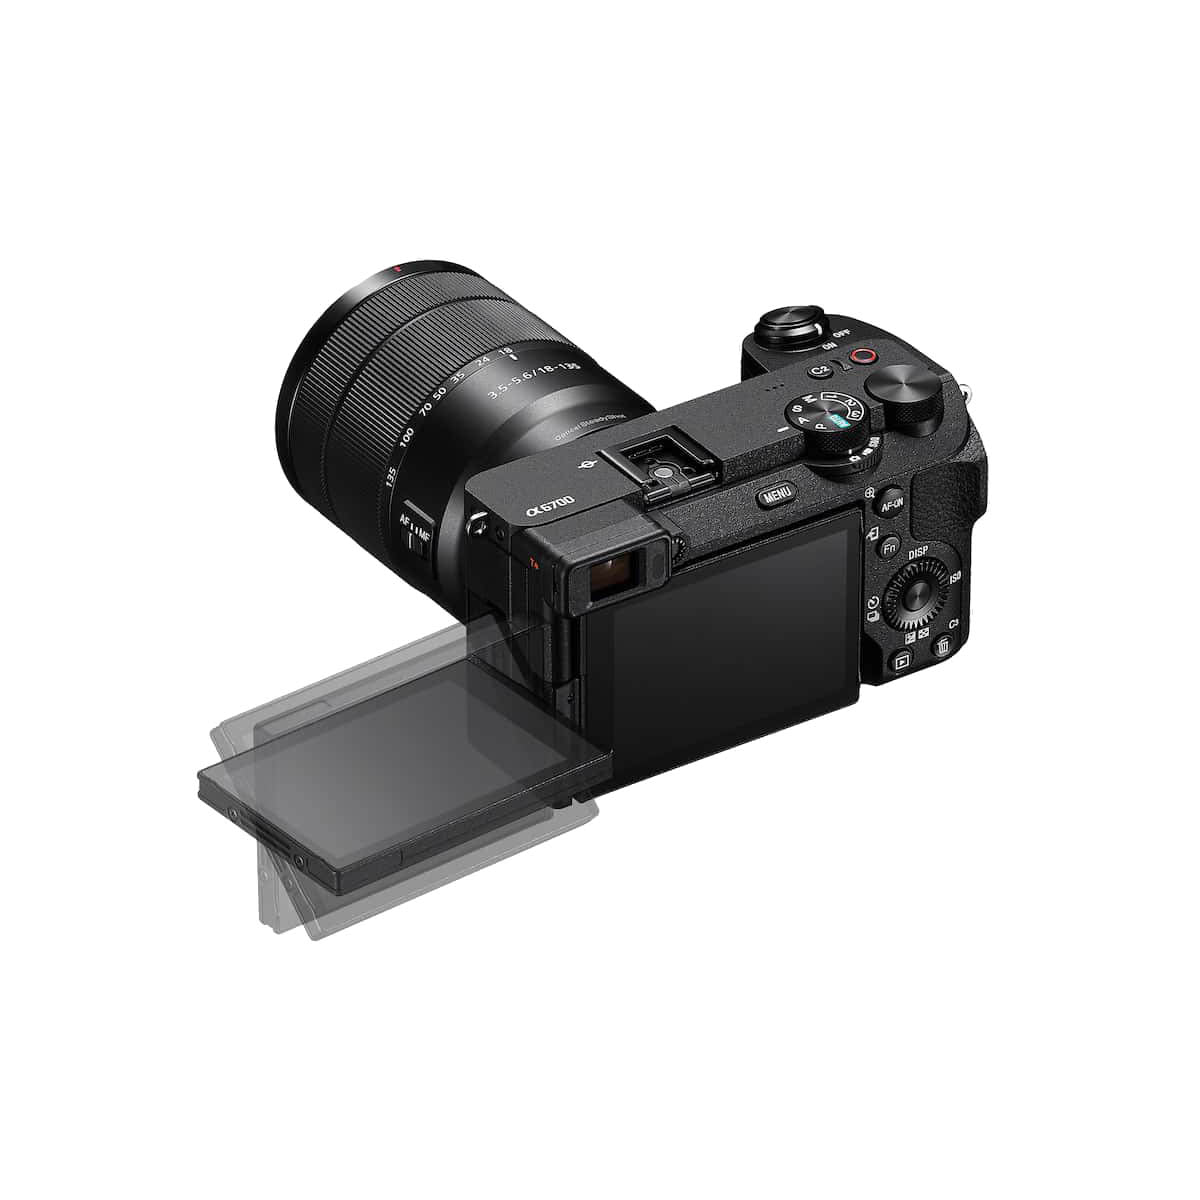 Sony a6700 Mirrorless Camera - Body Only - Black - Murphy's Camera